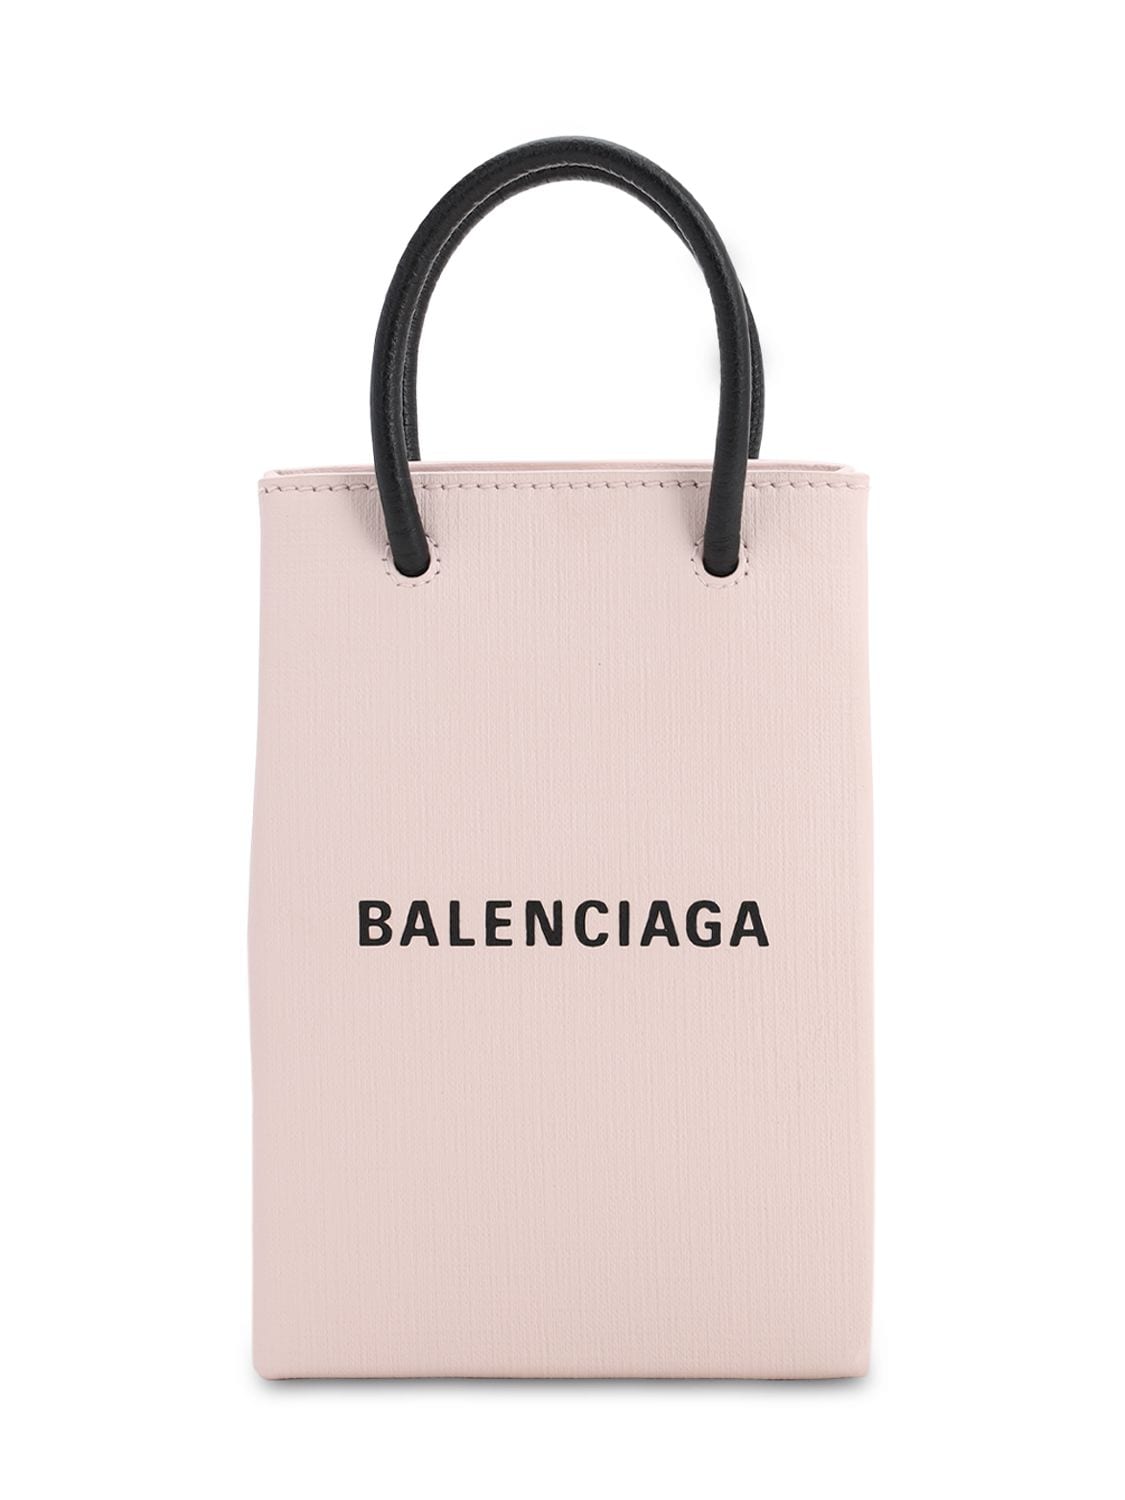 Balenciaga Phone Holder Shopping Bag In Light Rose Leather | ModeSens